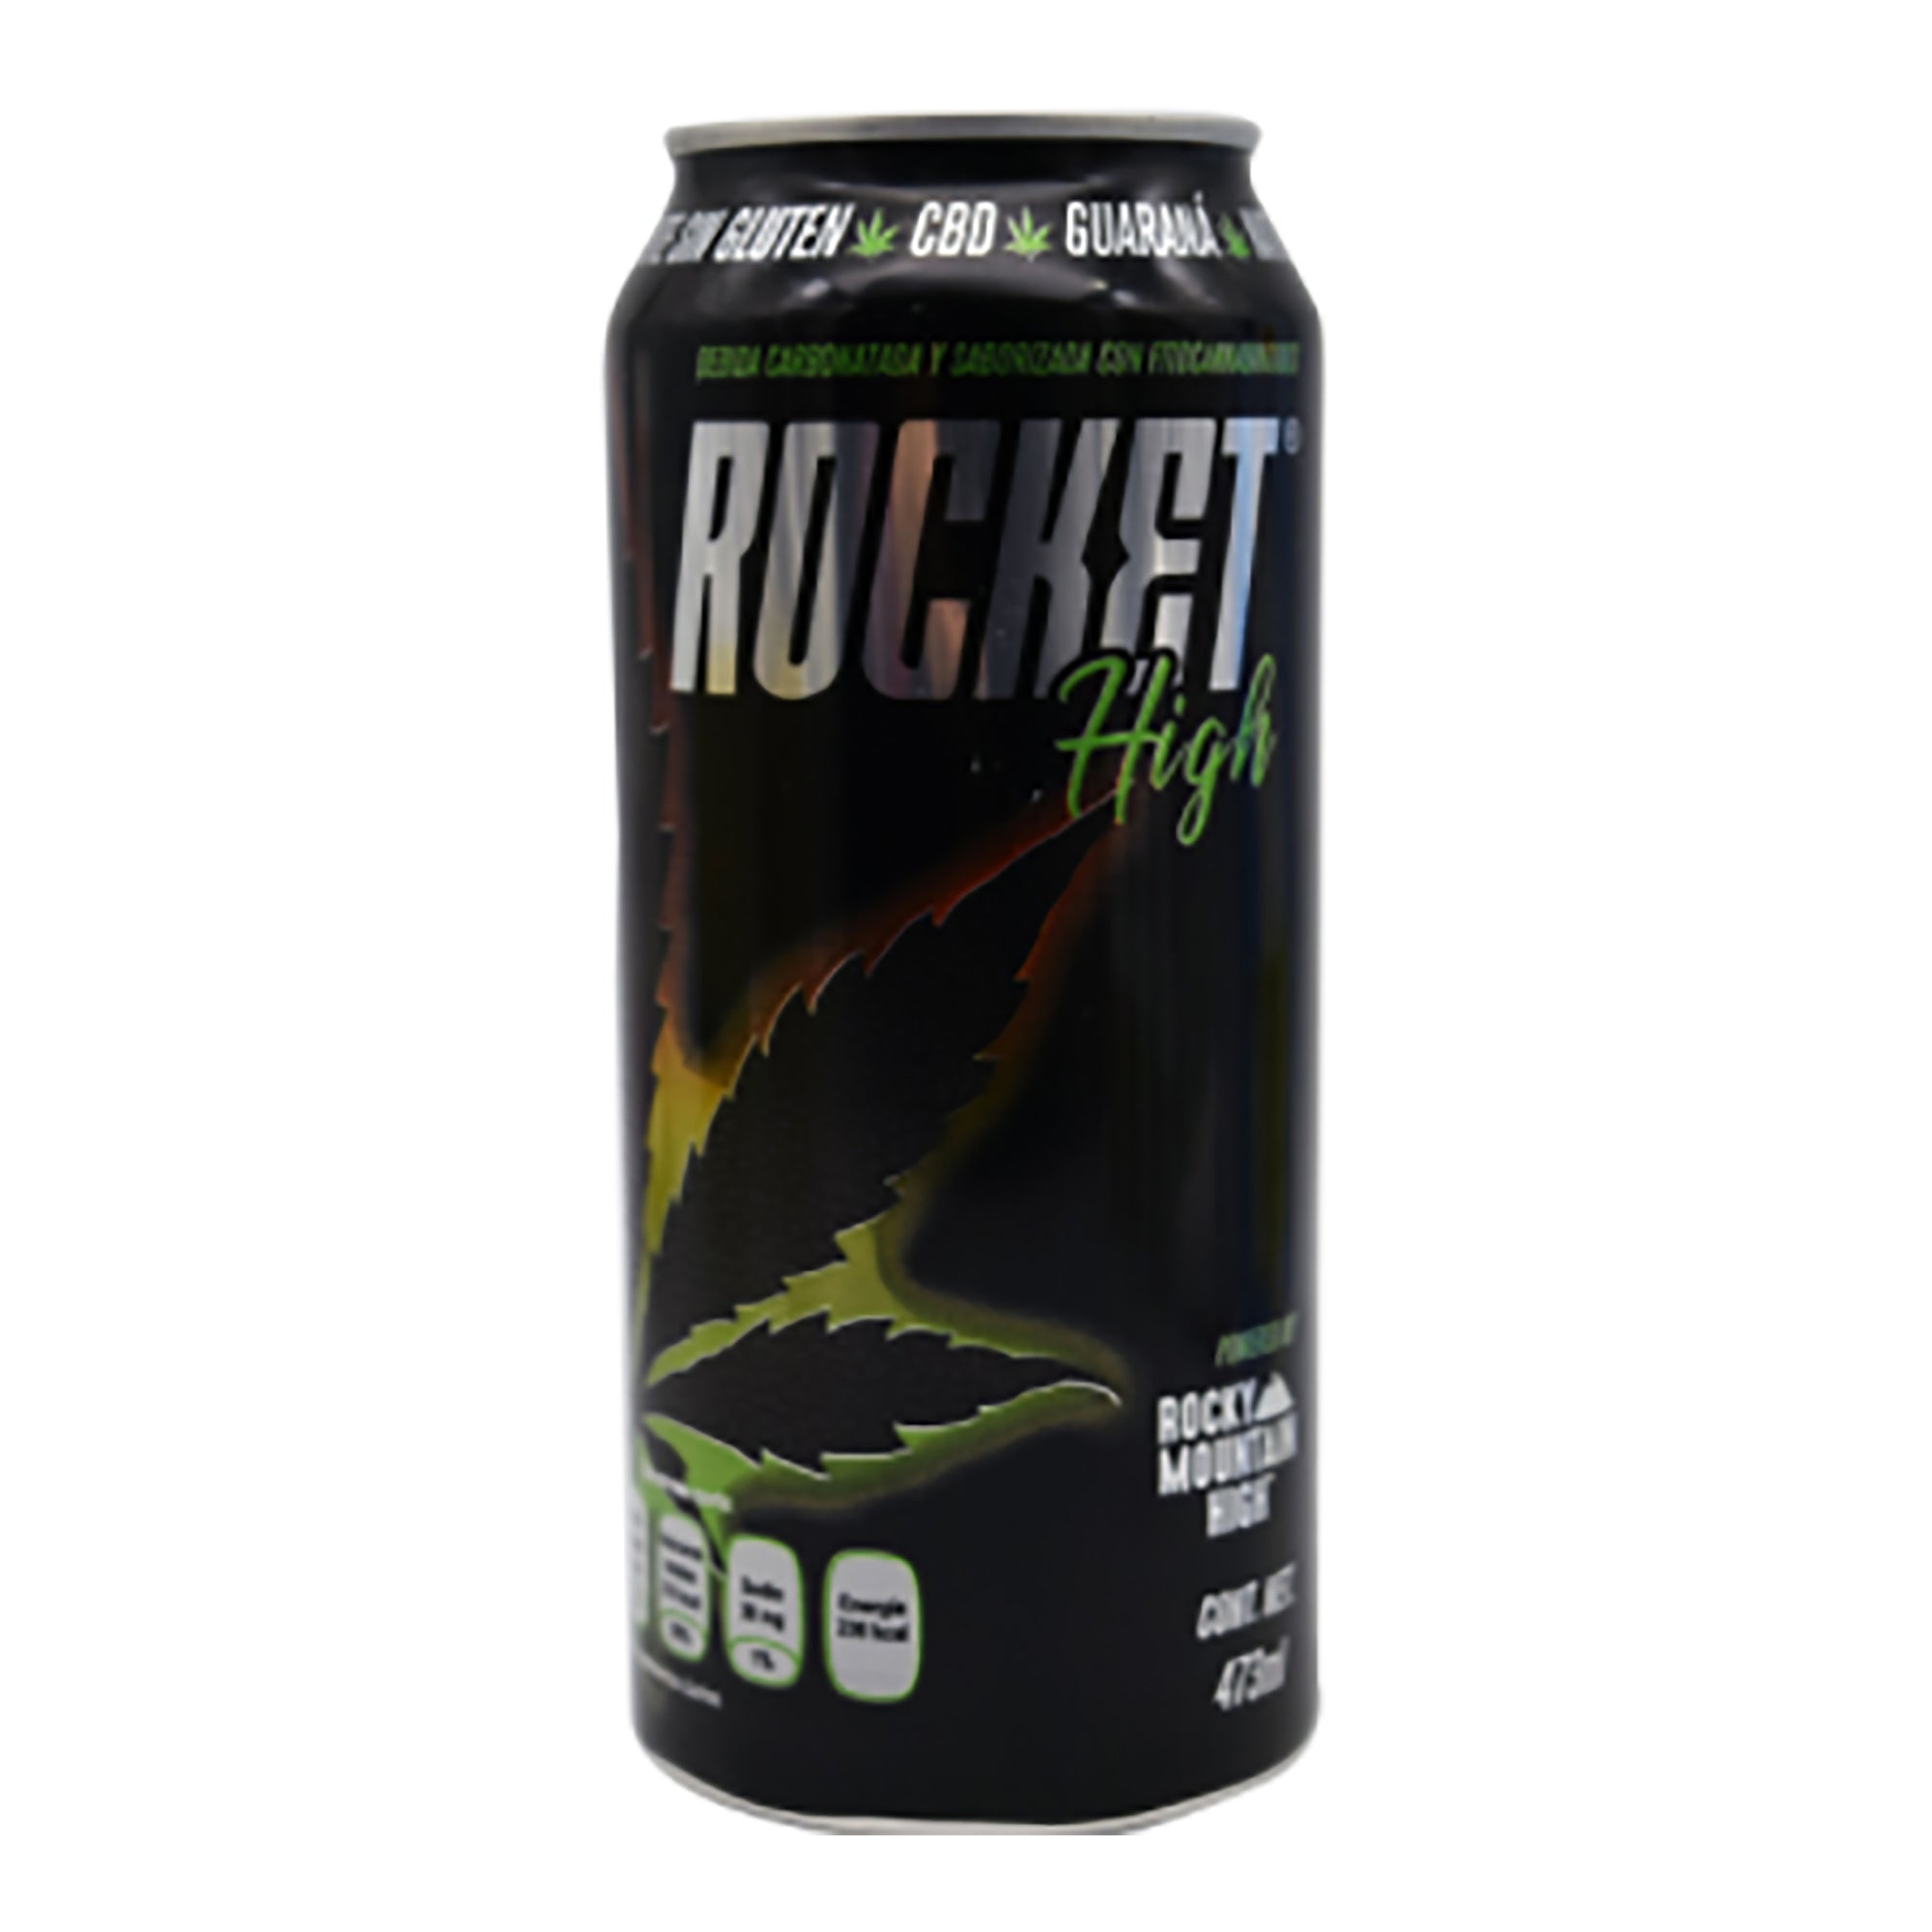 Rocket high 463 ml (PAQUETE 6)